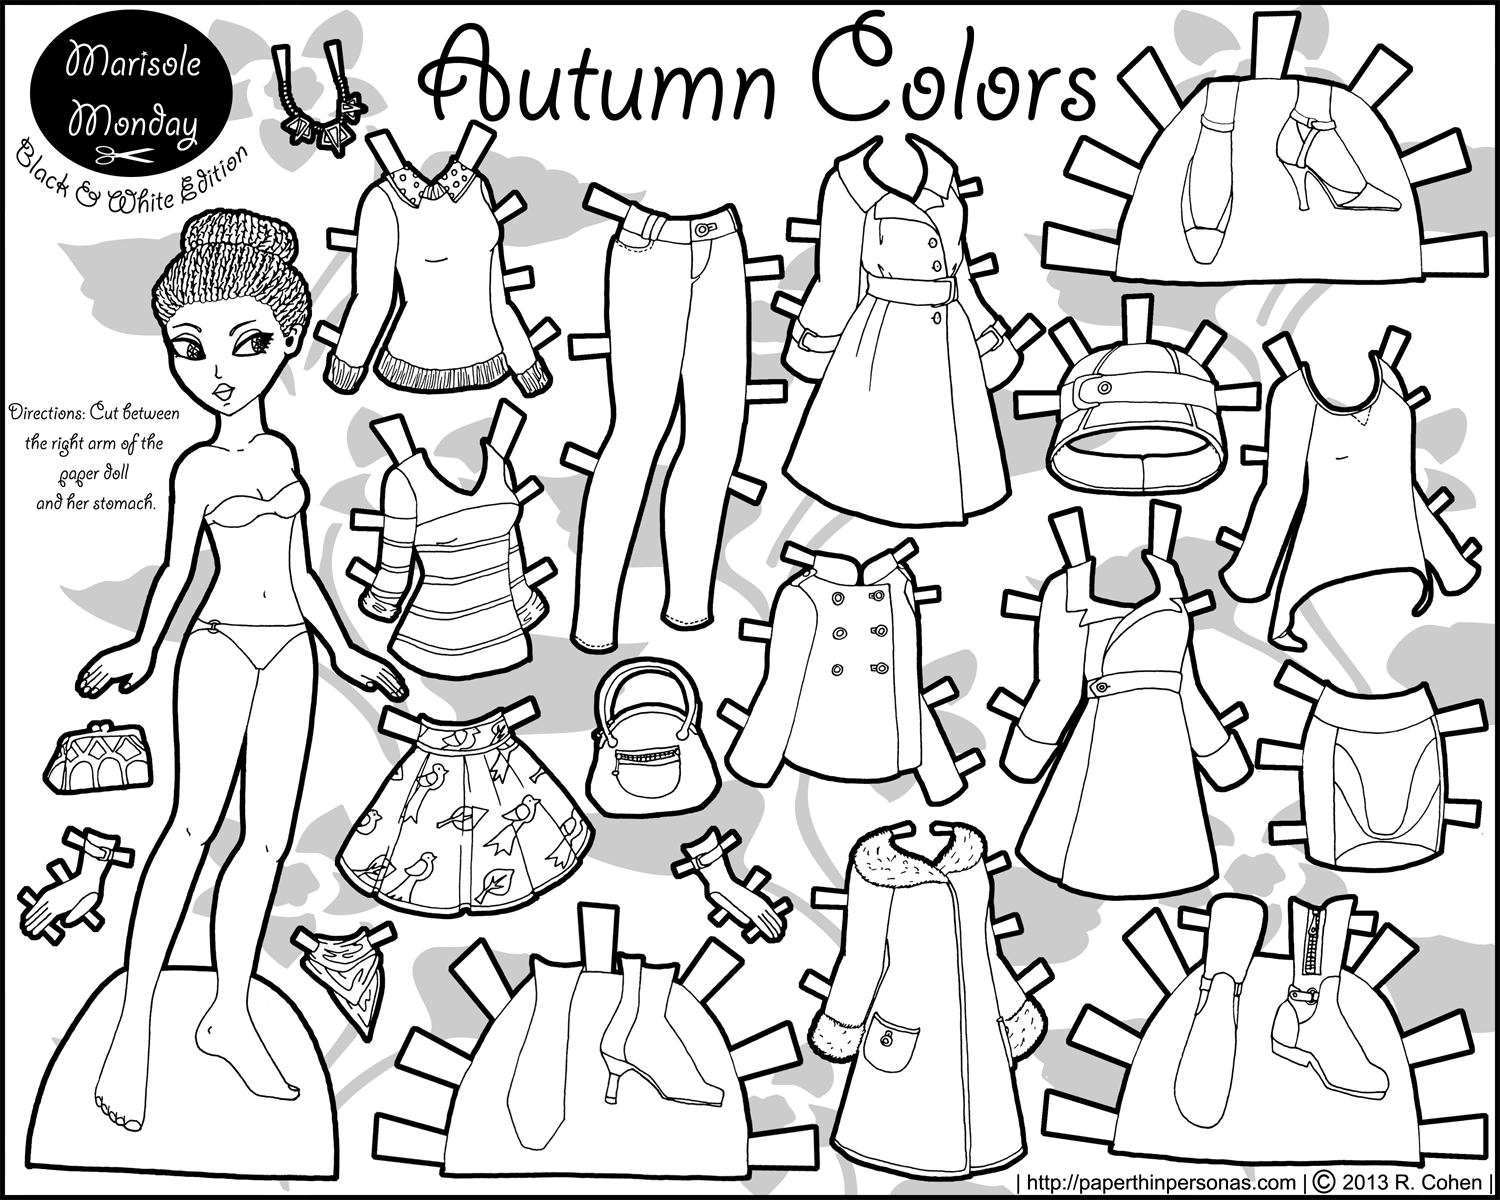 Marisole Monday: Autumn Colors | | Paper Thin Personas